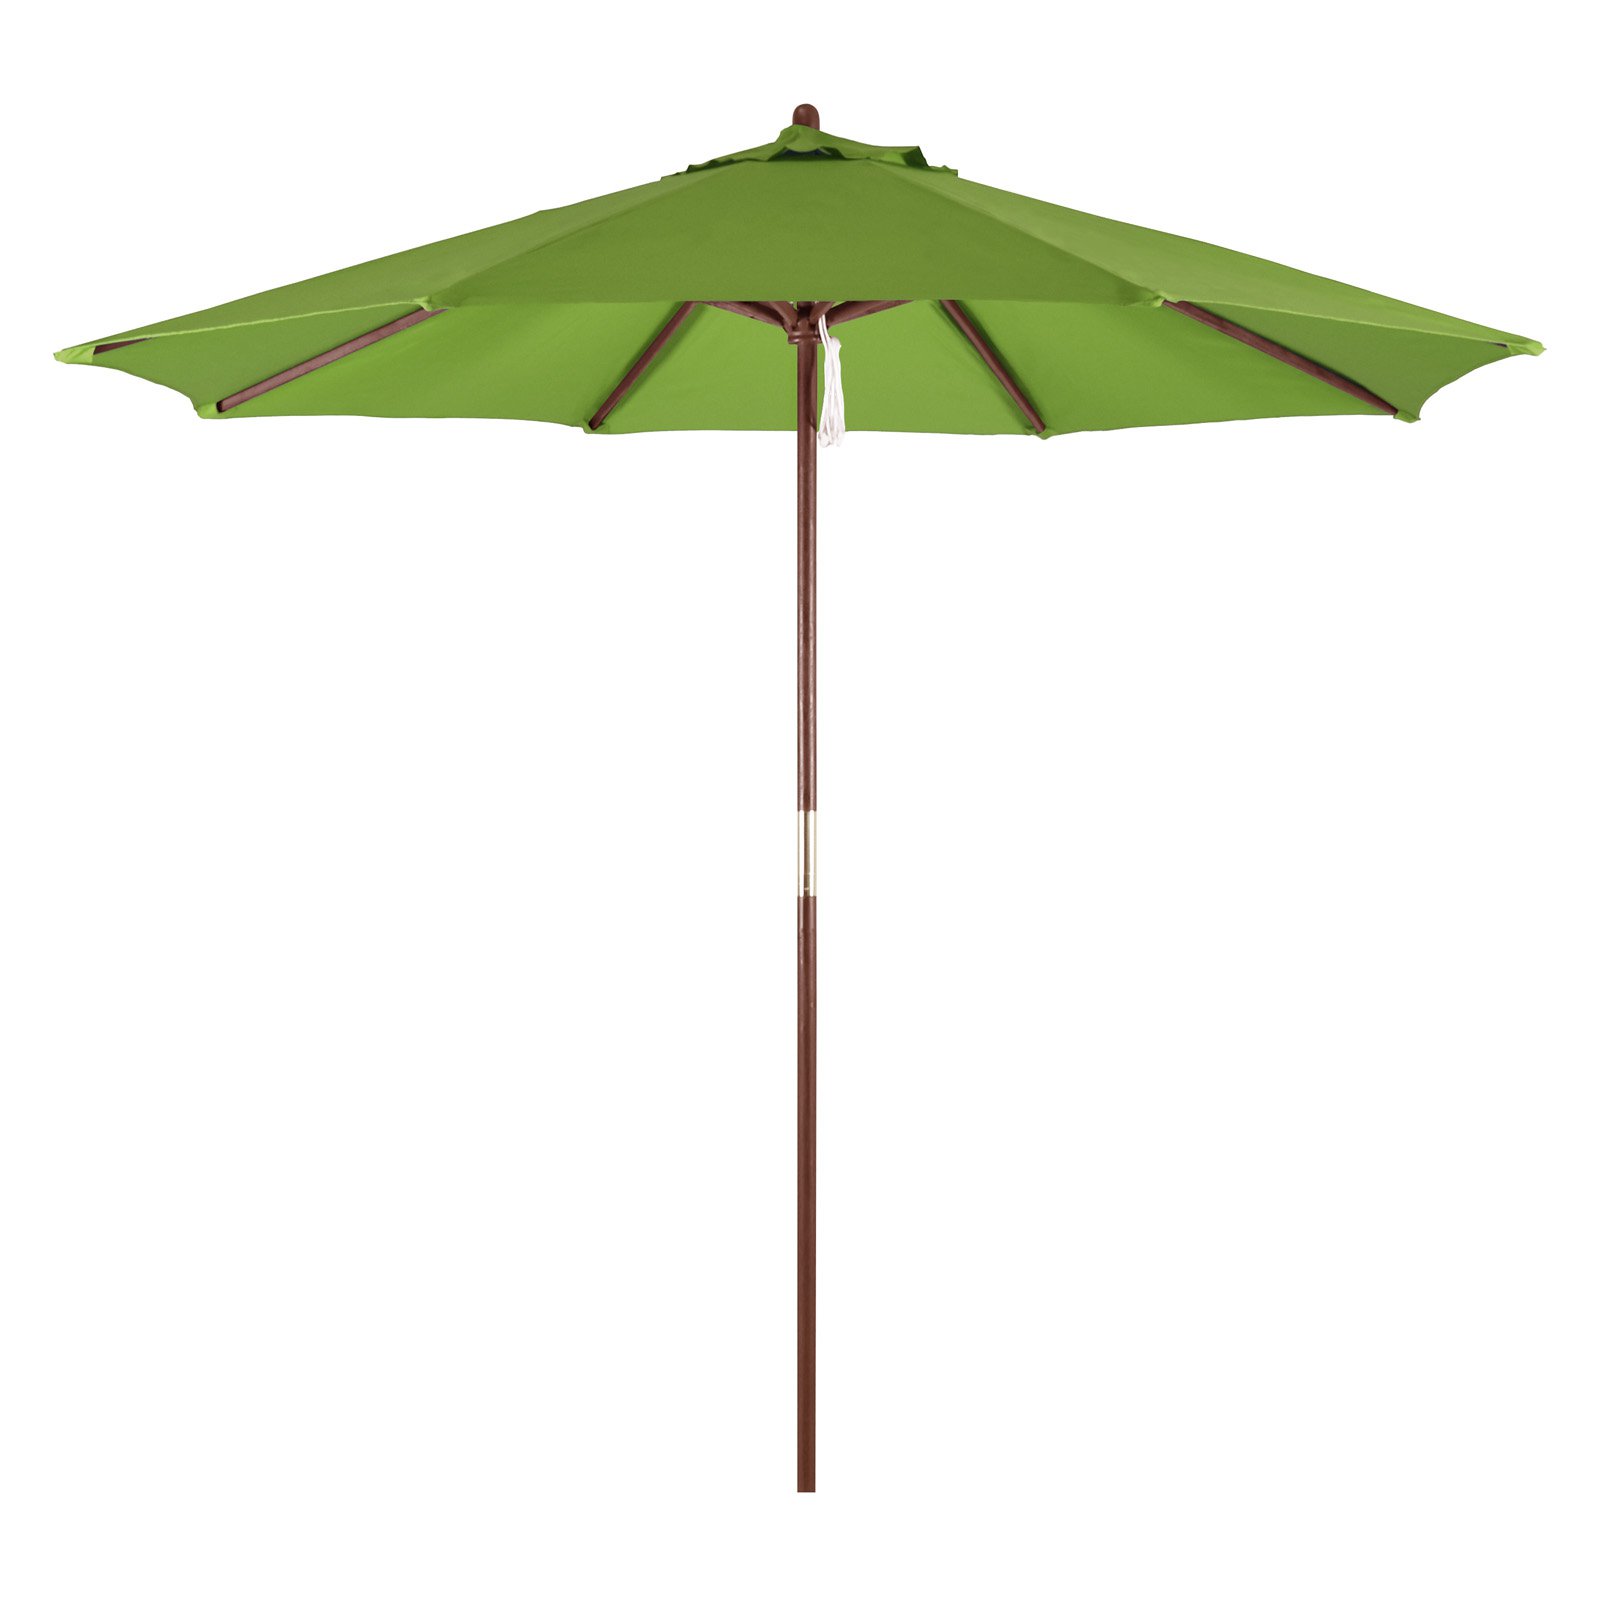 California Umbrella 9 ft. Wood Polyester Market Umbrella - image 1 of 3